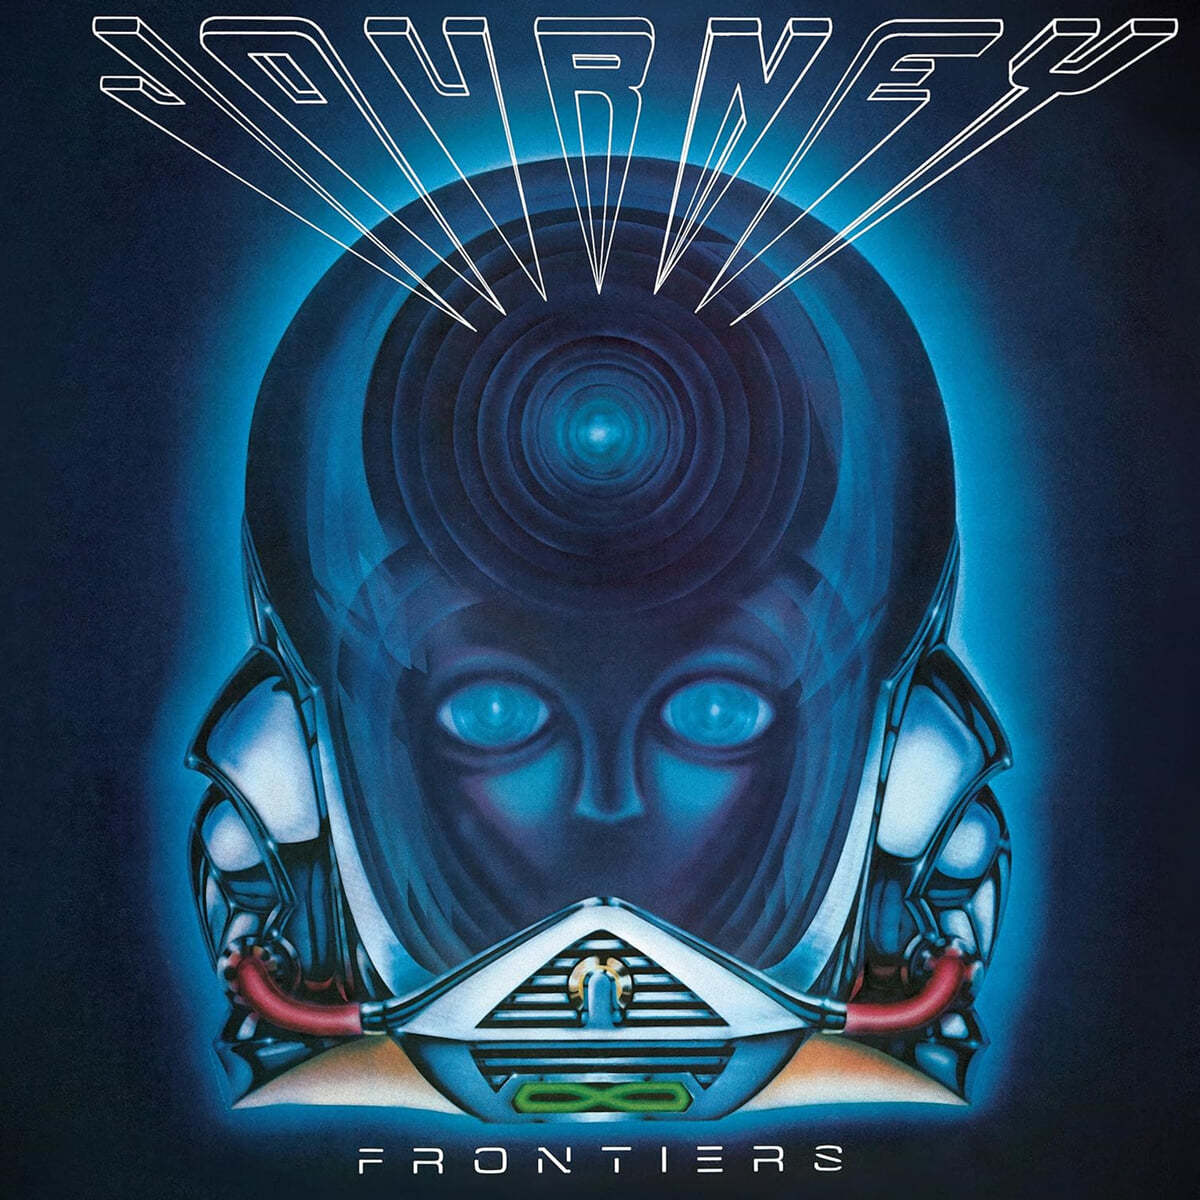 Journey (저니) - Frontiers [7인치 Vinyl + LP]